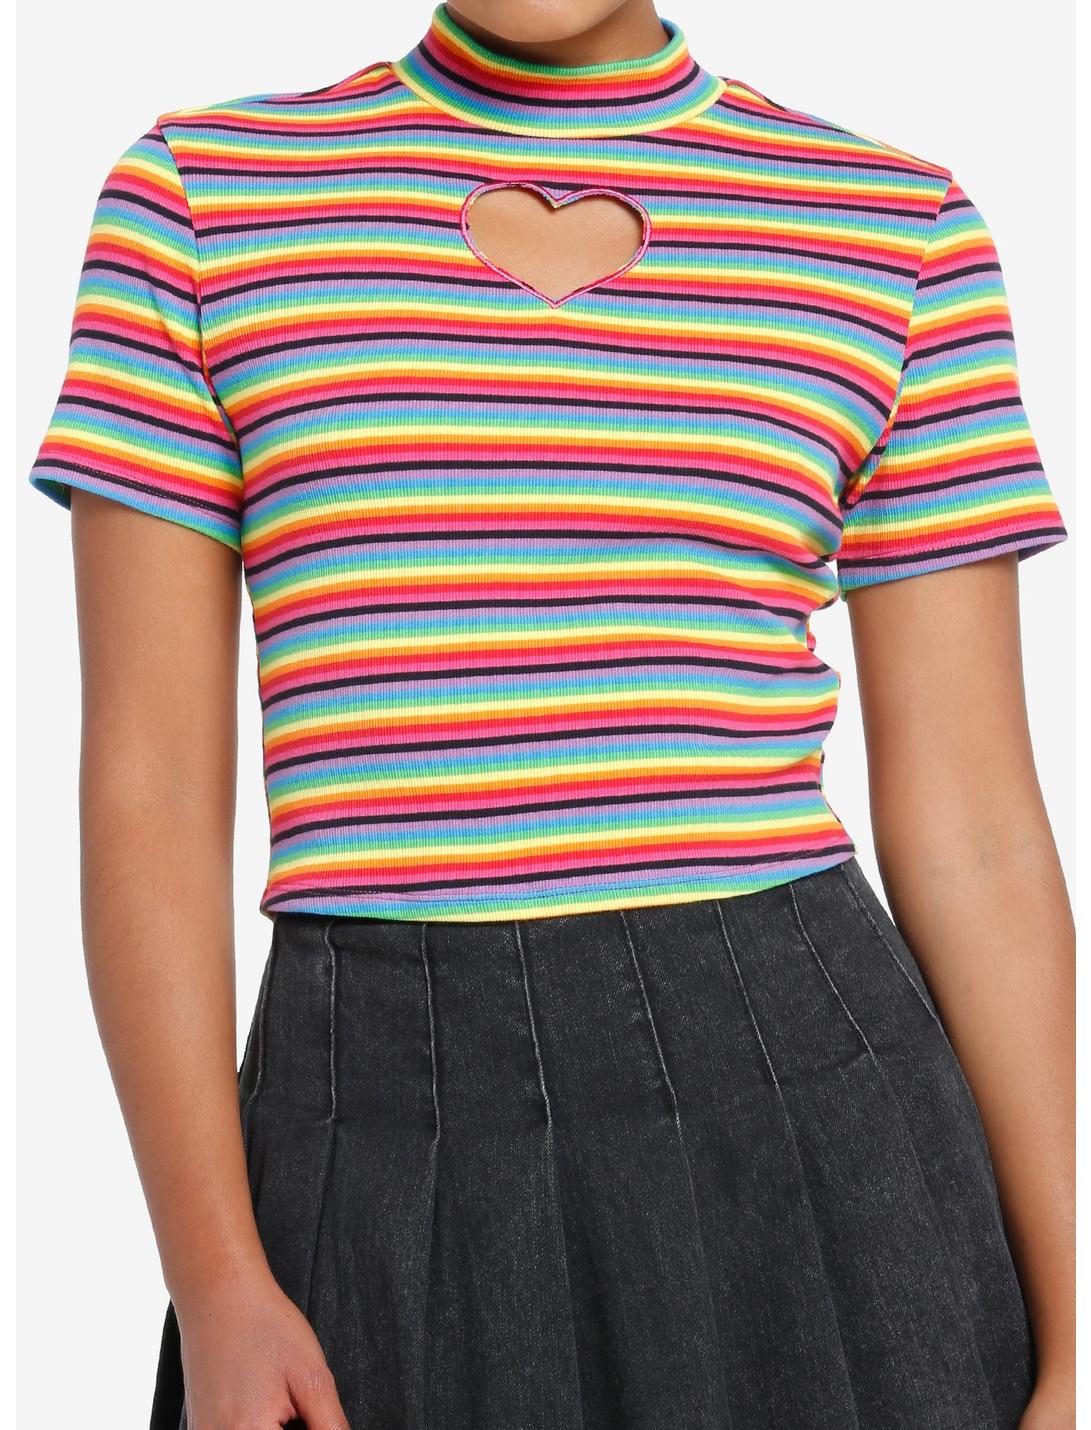 Social Collision Rainbow Stripe Heart Cutout Girls Mock Neck Top, STRIPES-RAINBOW, hi-res